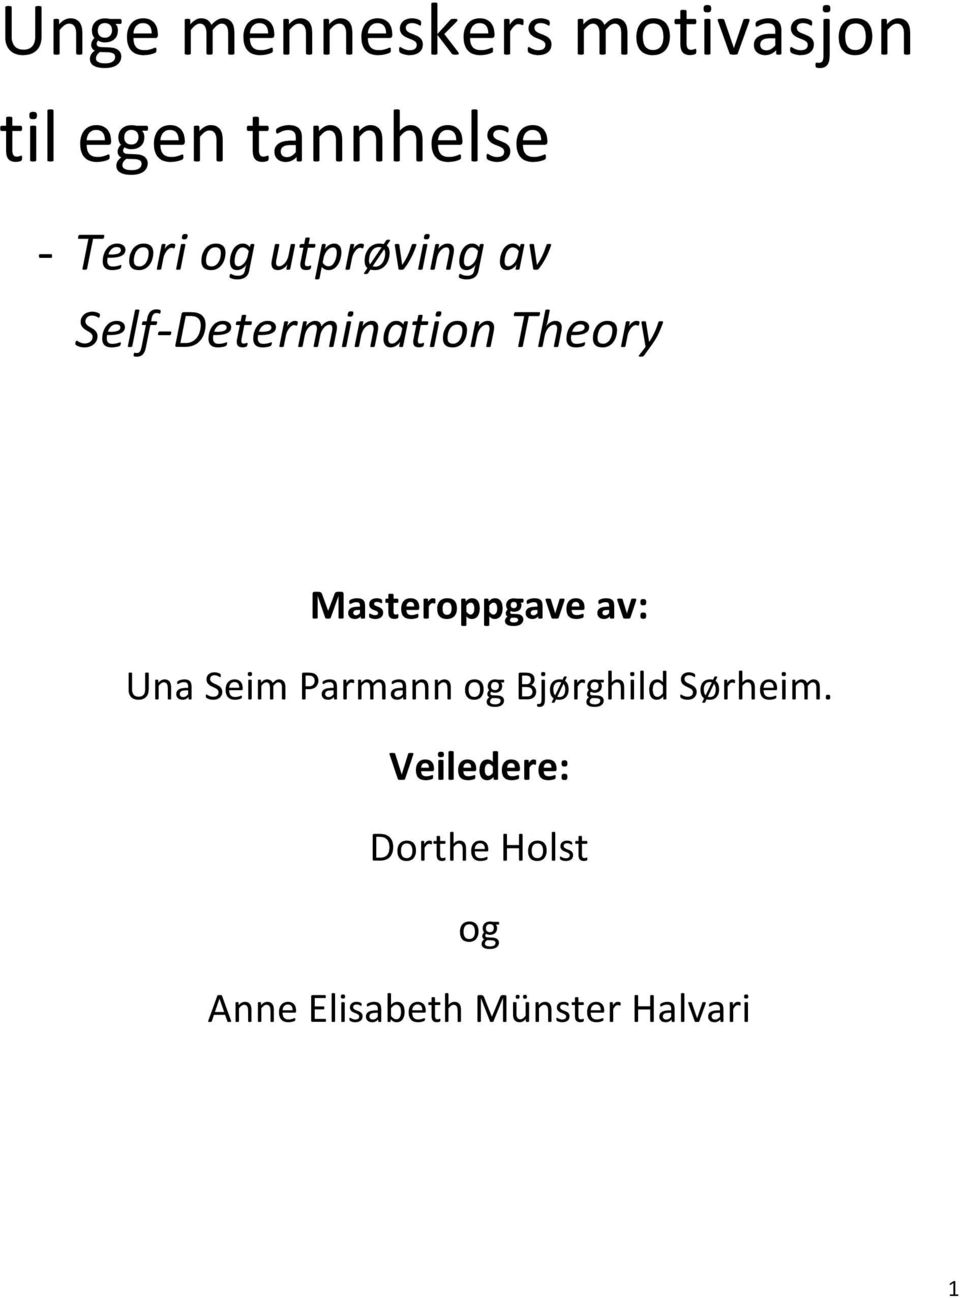 Masteroppgave av: Una Seim Parmann og Bjørghild